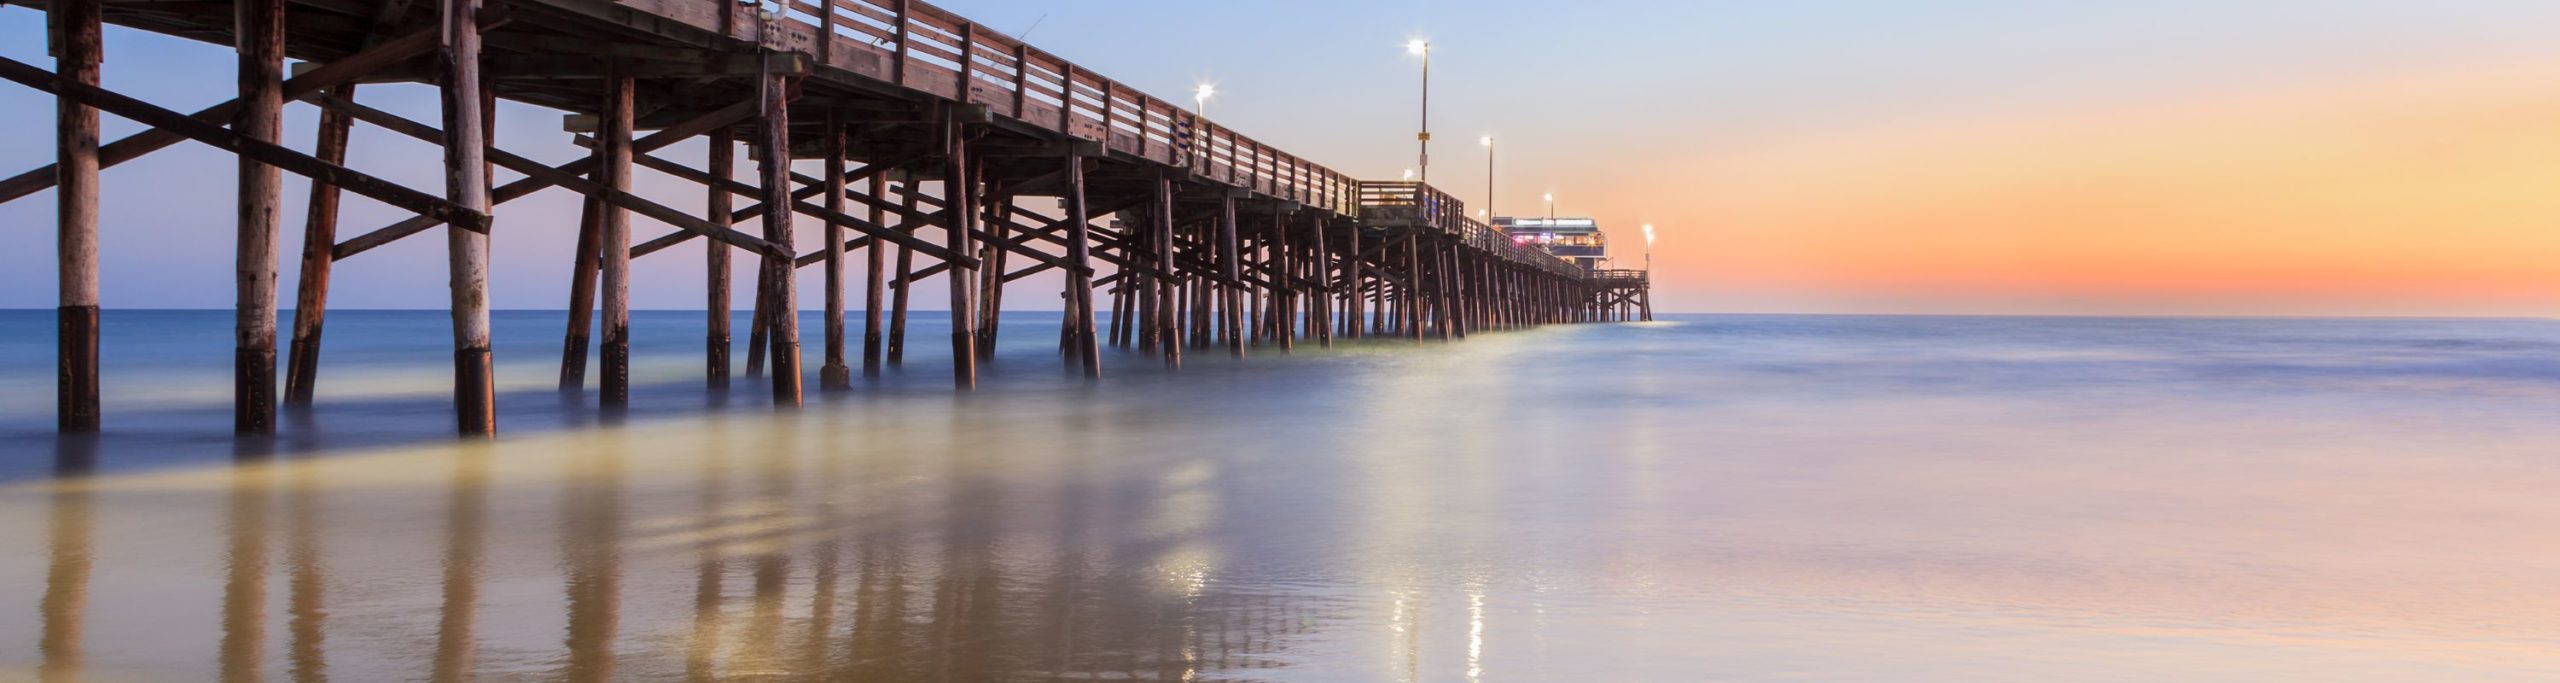 SoCal Beaches--image of Newport Beach Pier.